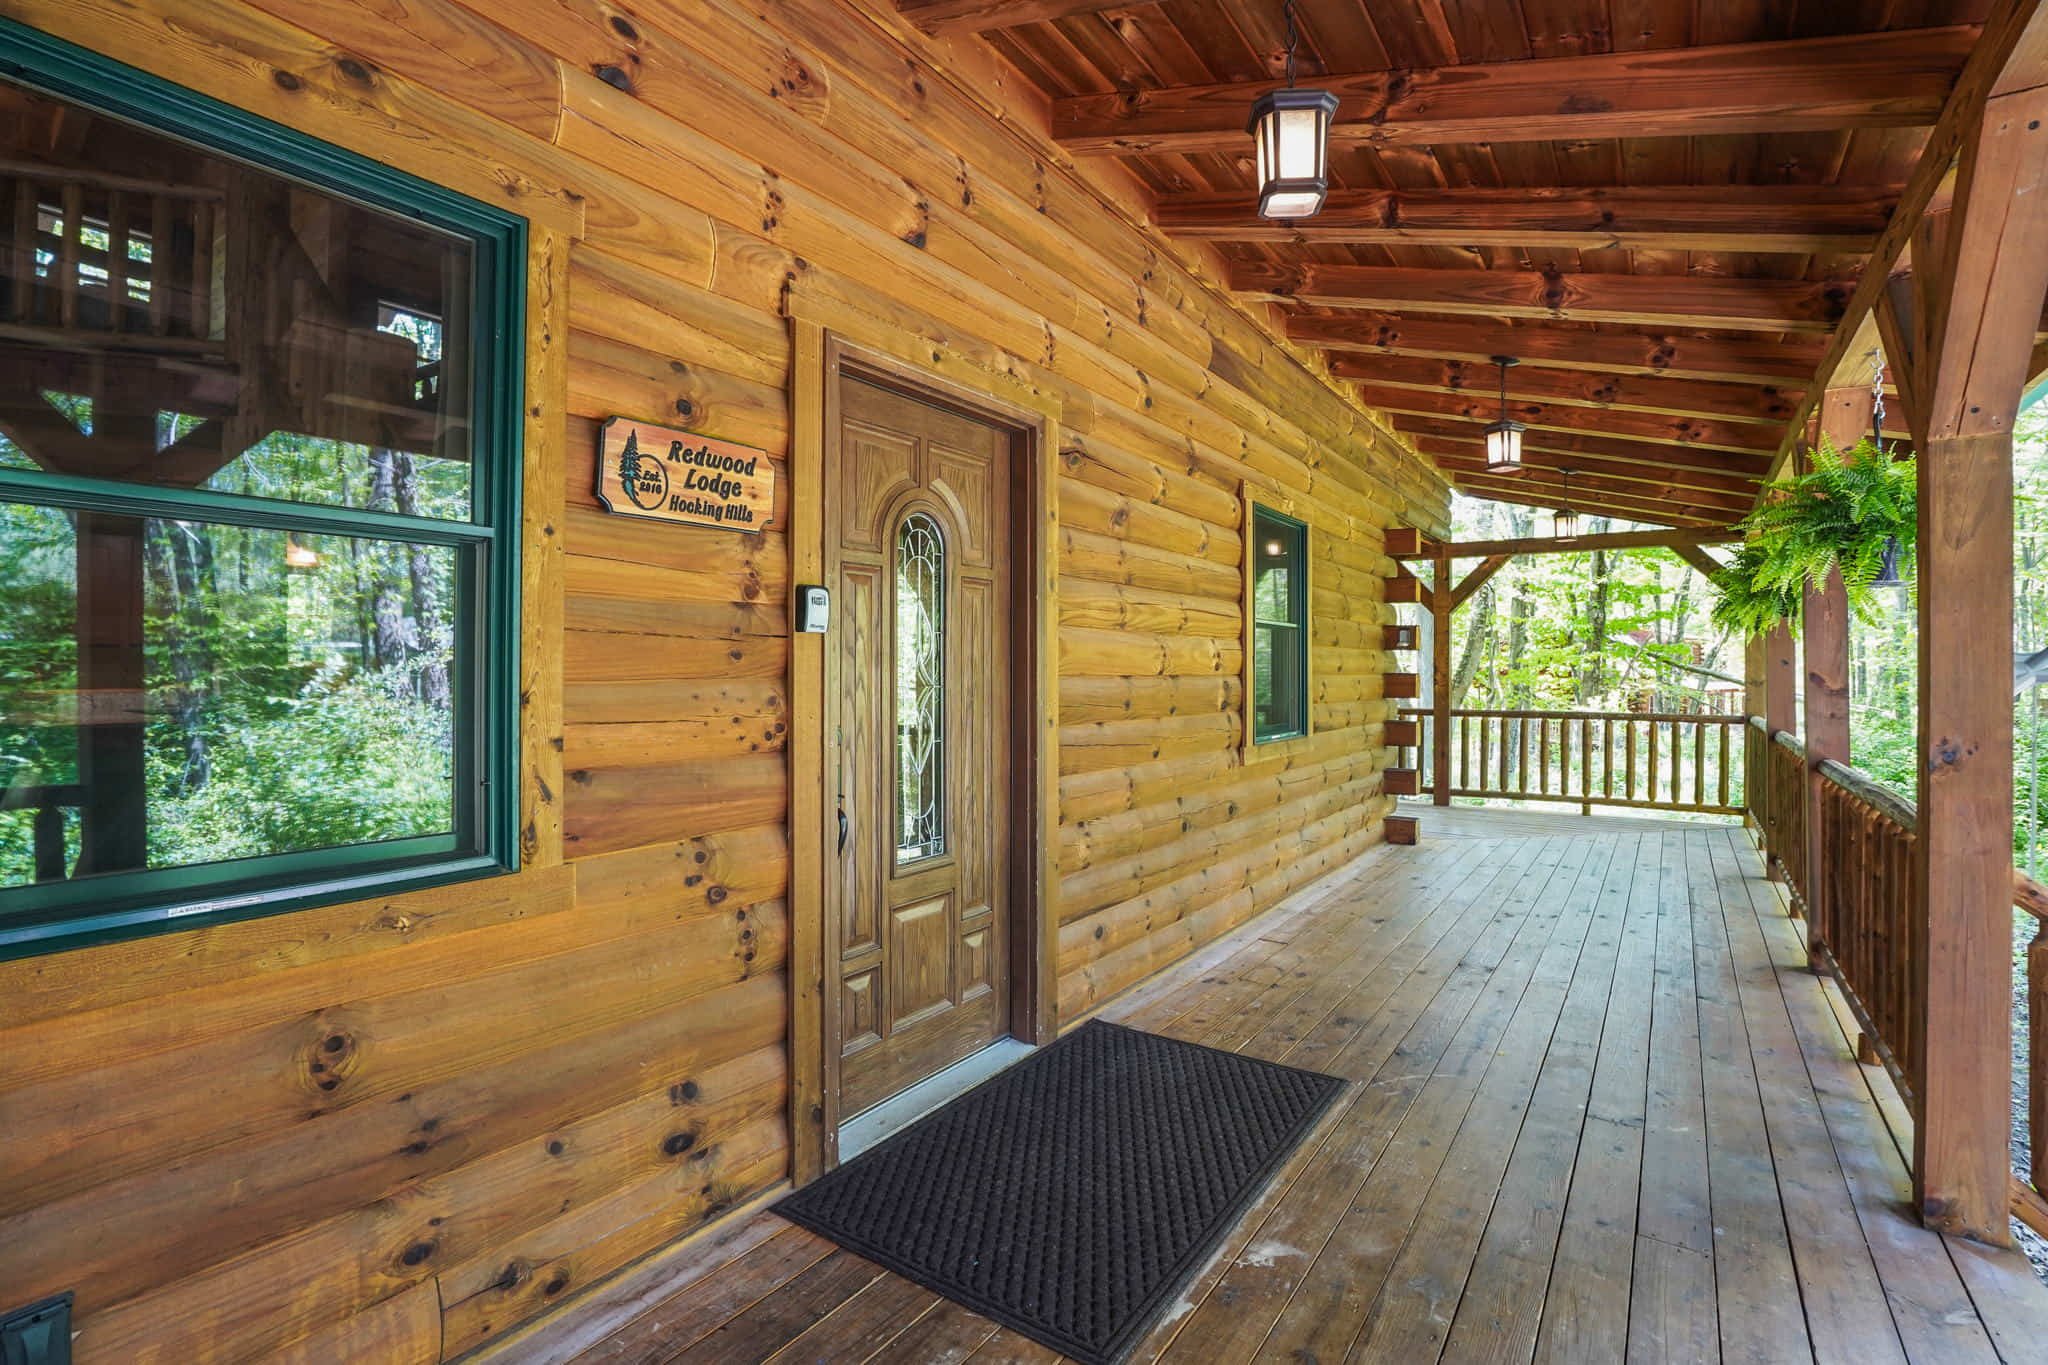 Redwood Lodge Front Entrance in Hocking hills ohio